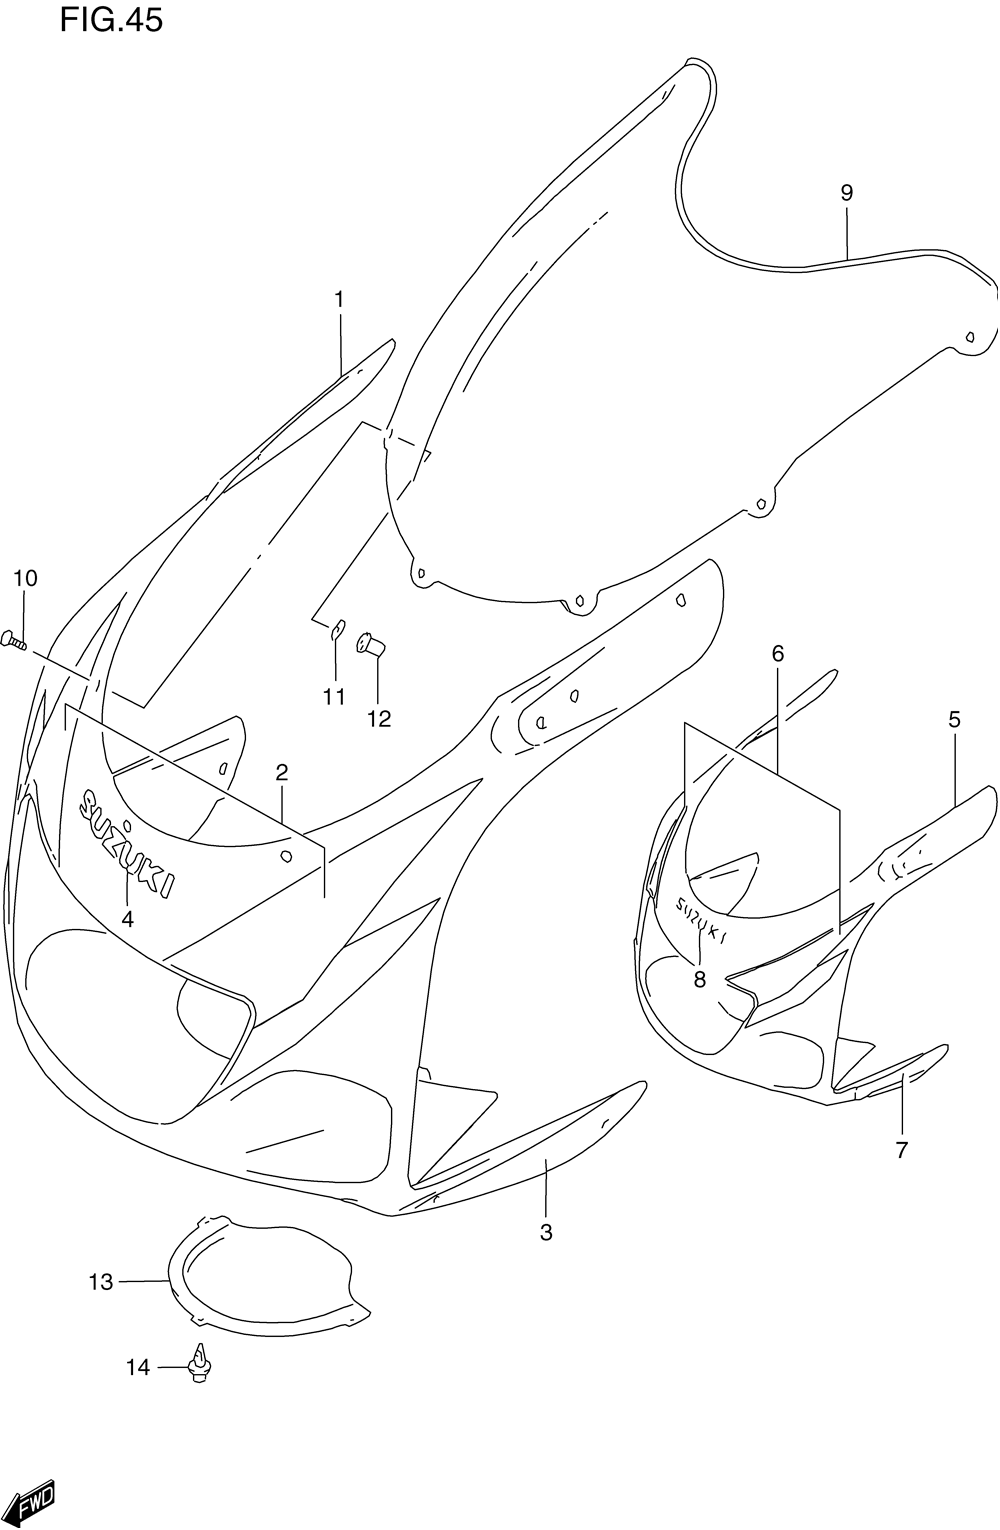 Cowling body (model v)